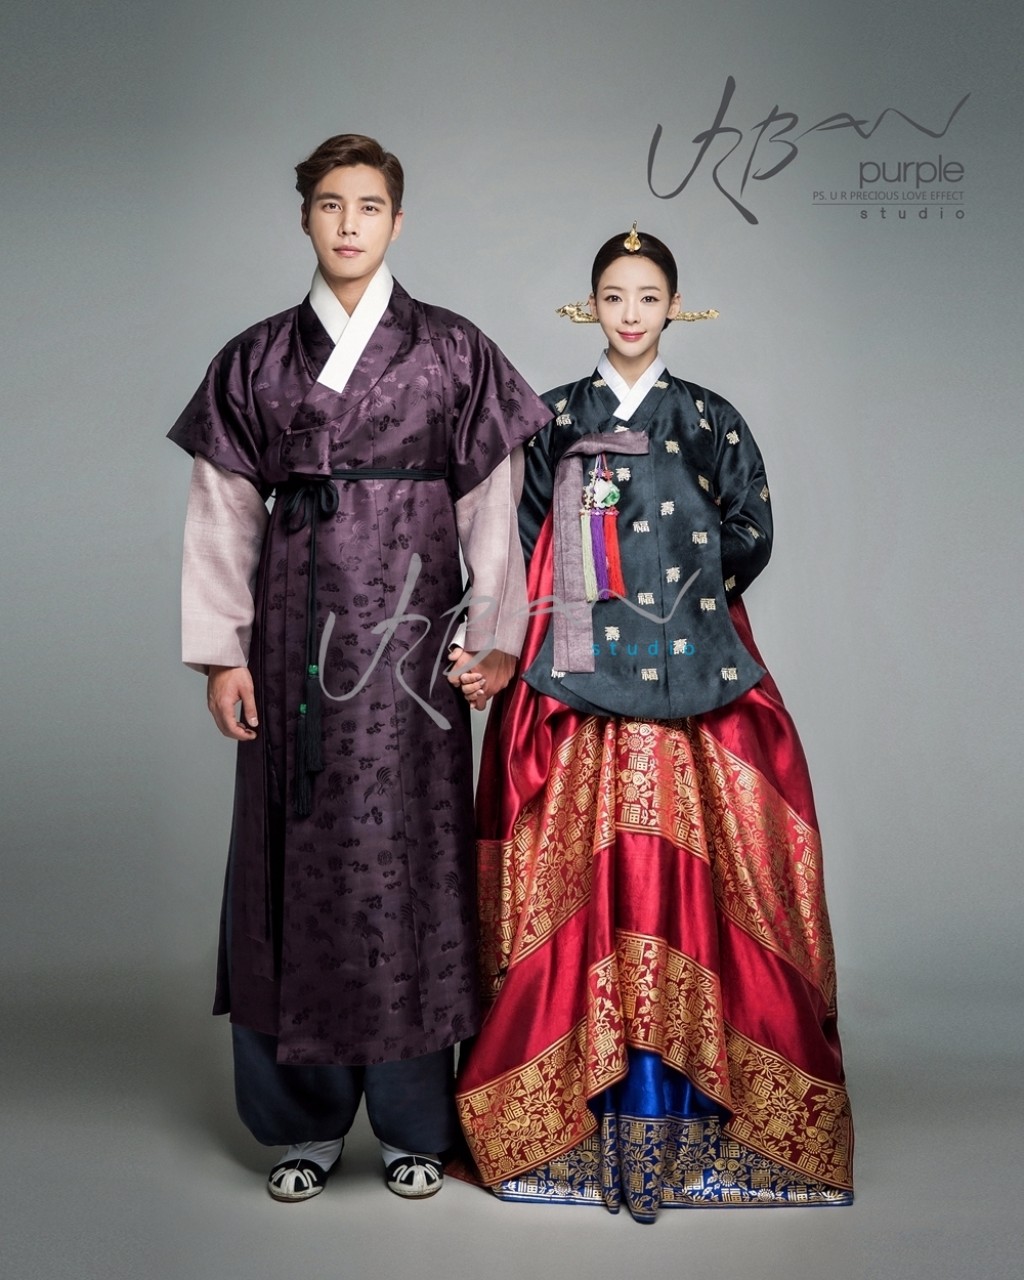 Korean Wedding Photos: Purple Collection 2 by Urban Studio on OneThreeOneFour 25